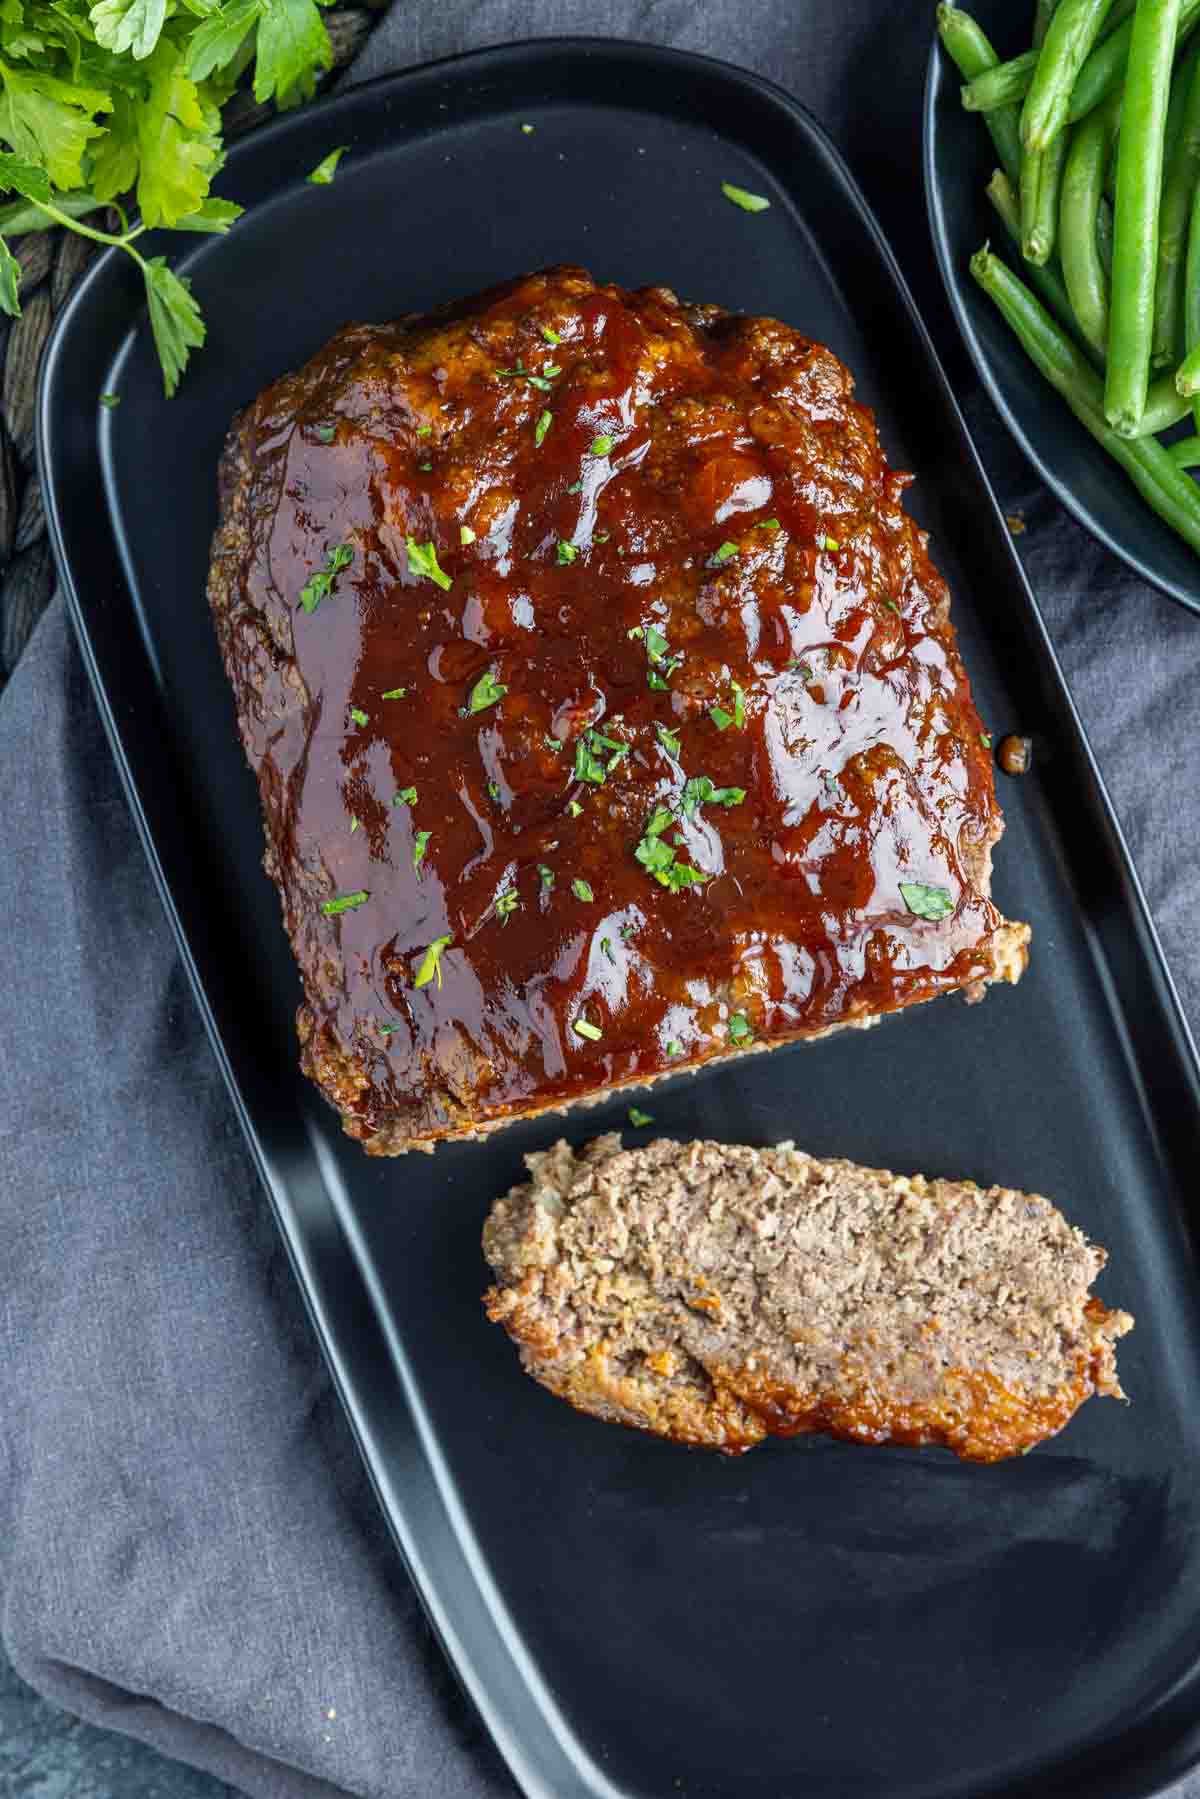 Easy Meatloaf Recipe for weeknight dinner